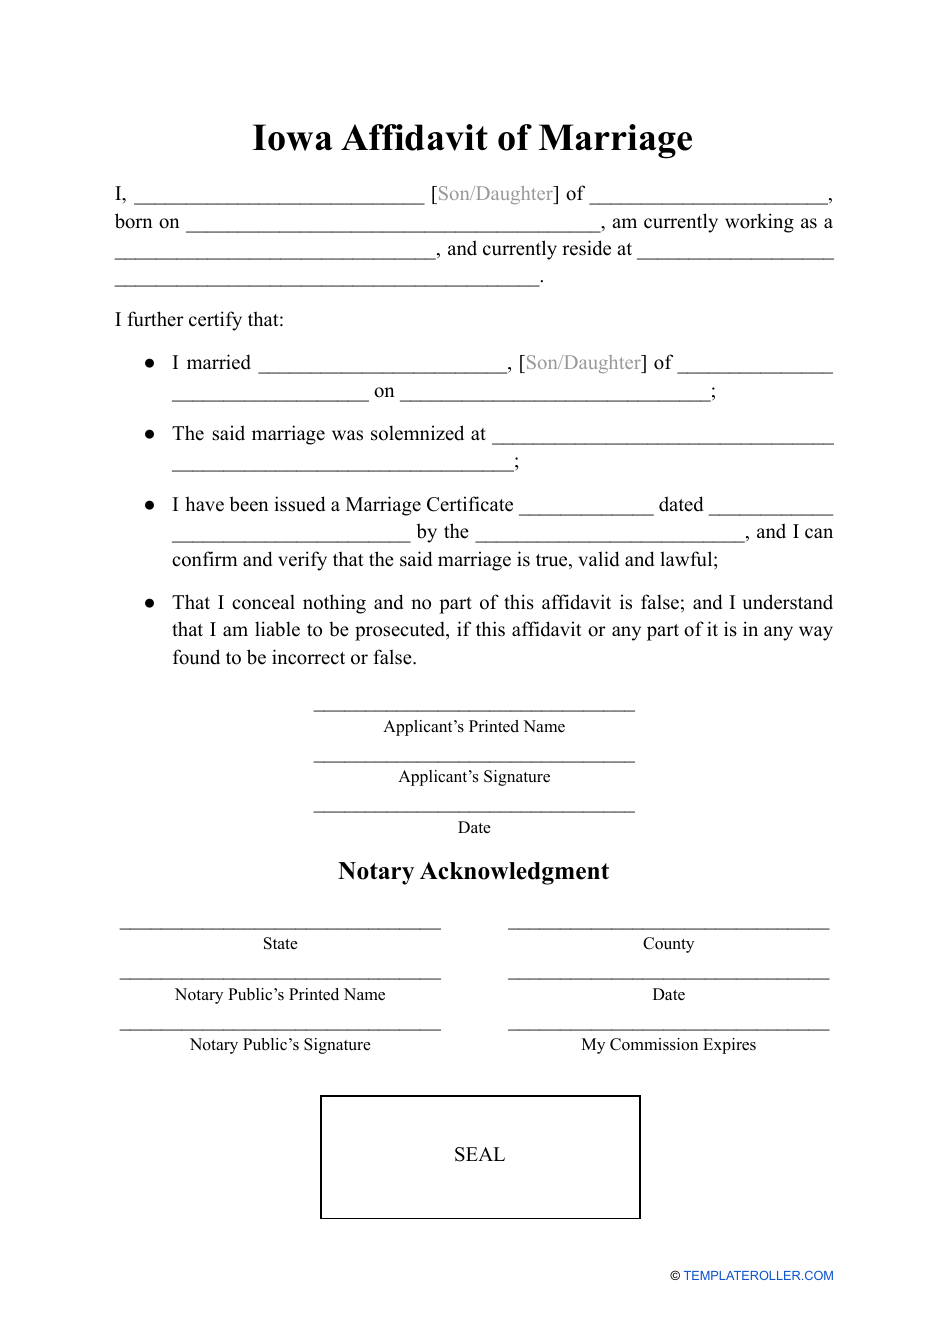 Affidavit of Marriage - Iowa, Page 1